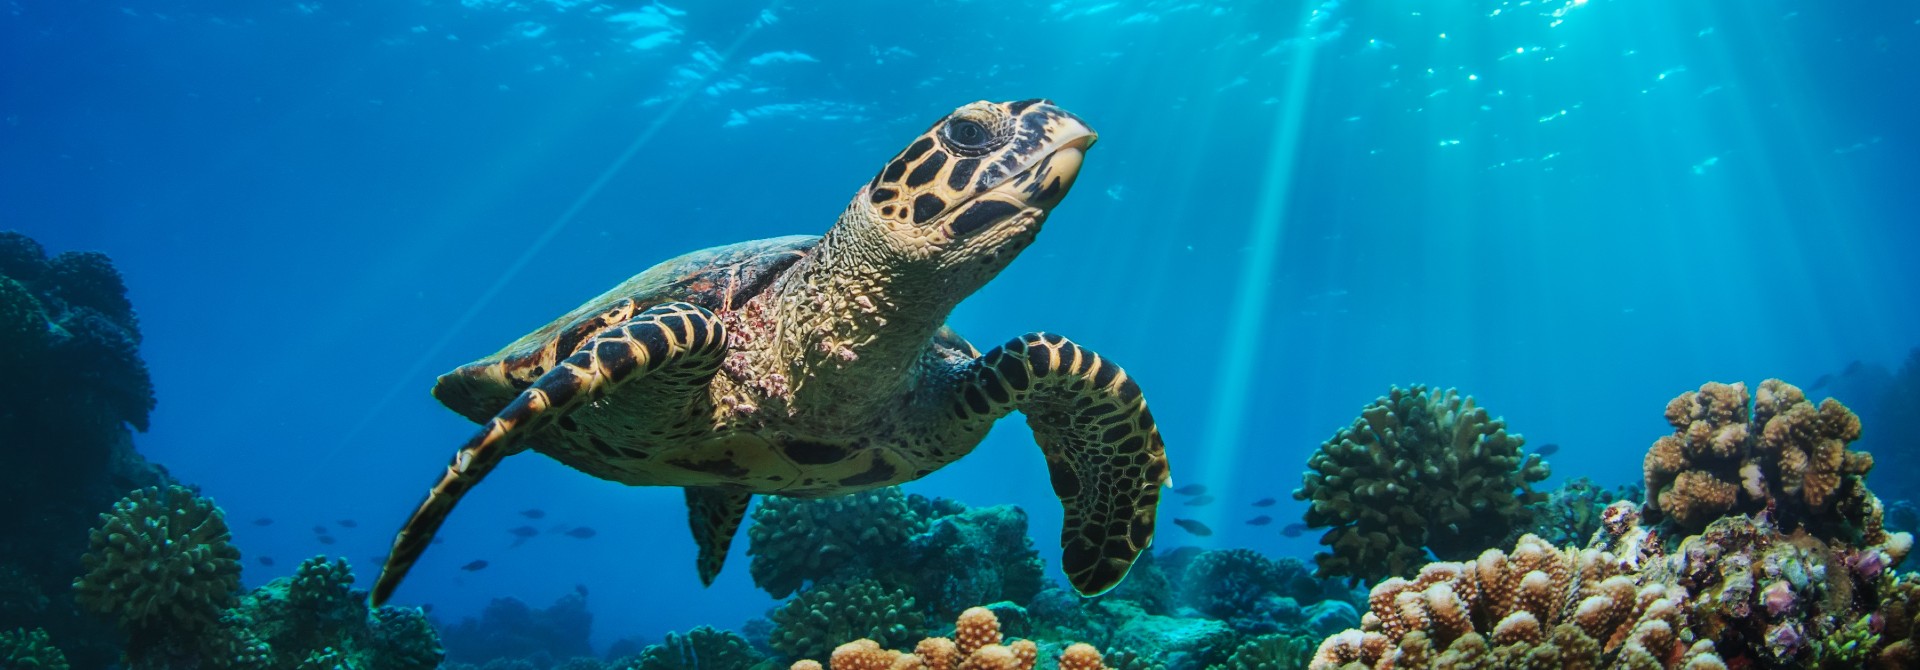 Foto de una tortuga en el mar